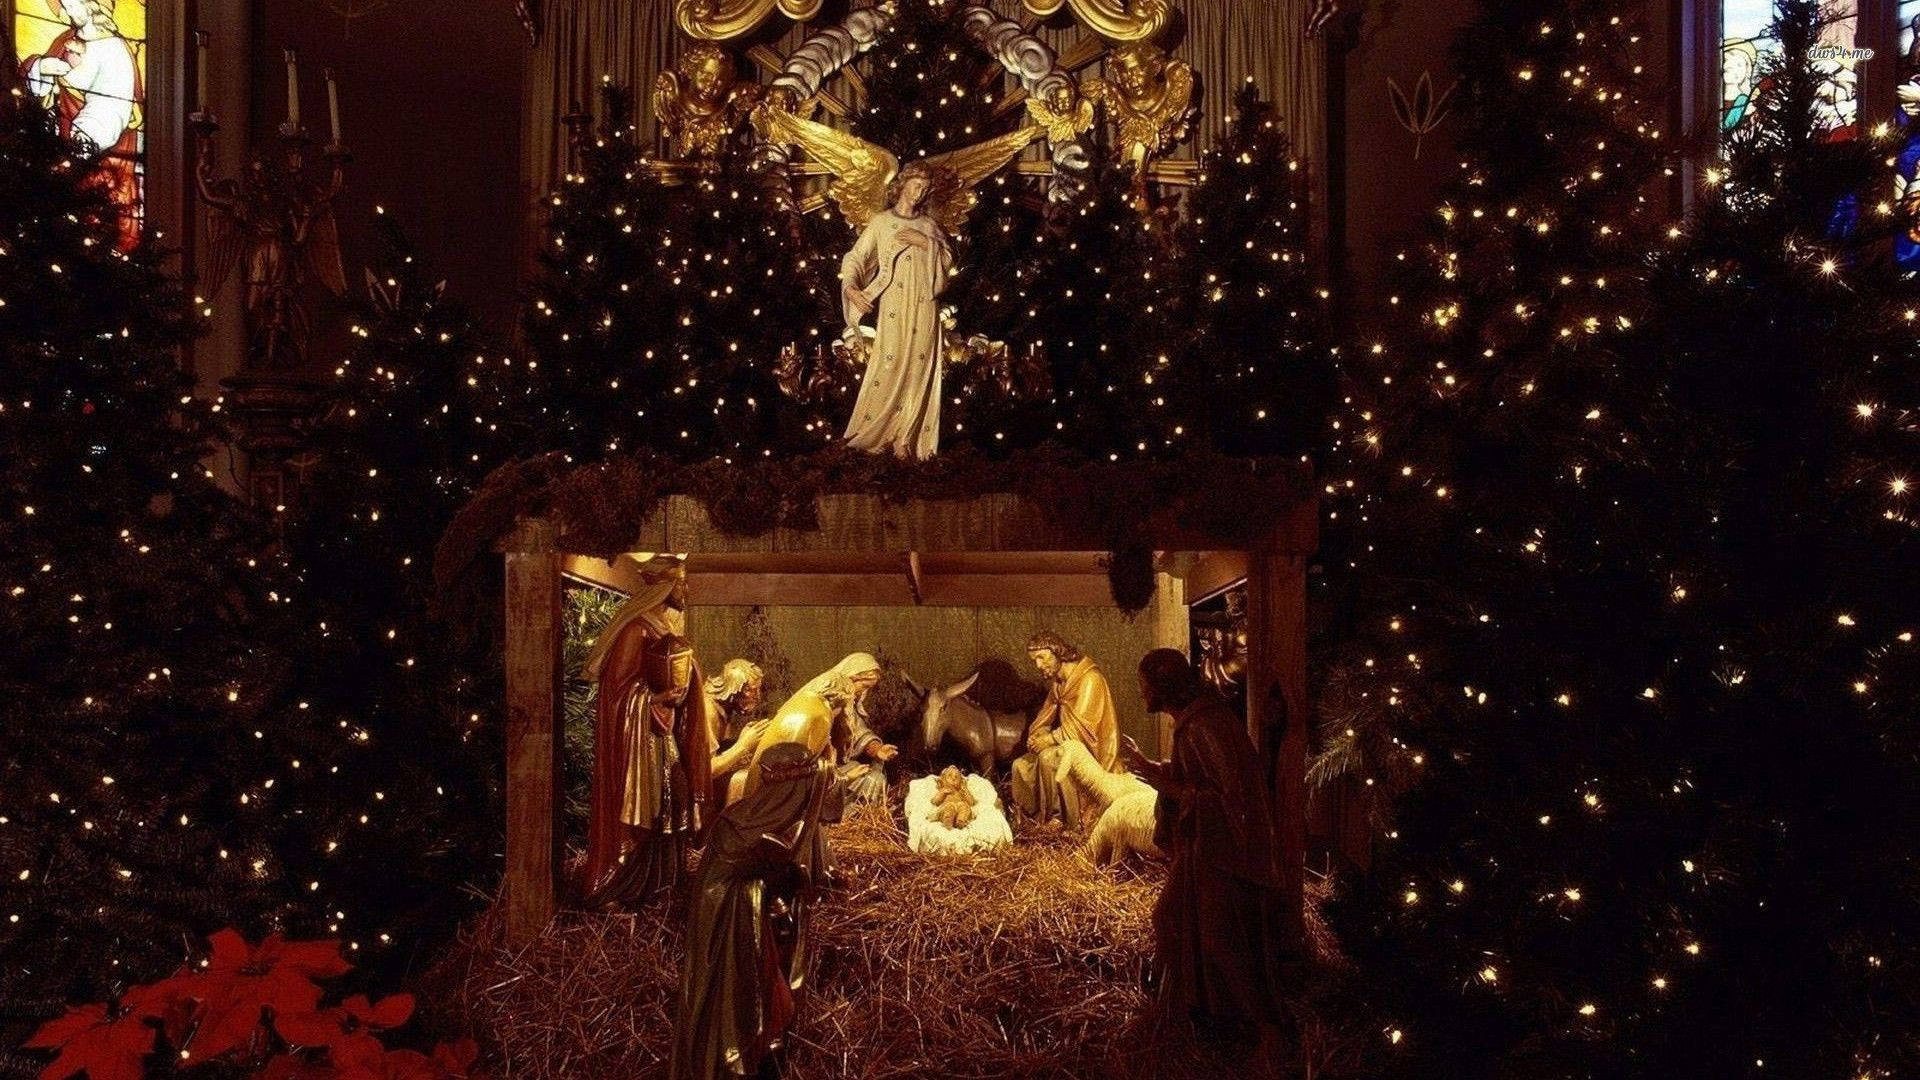 Nativity Scene Display Between Christmas Trees